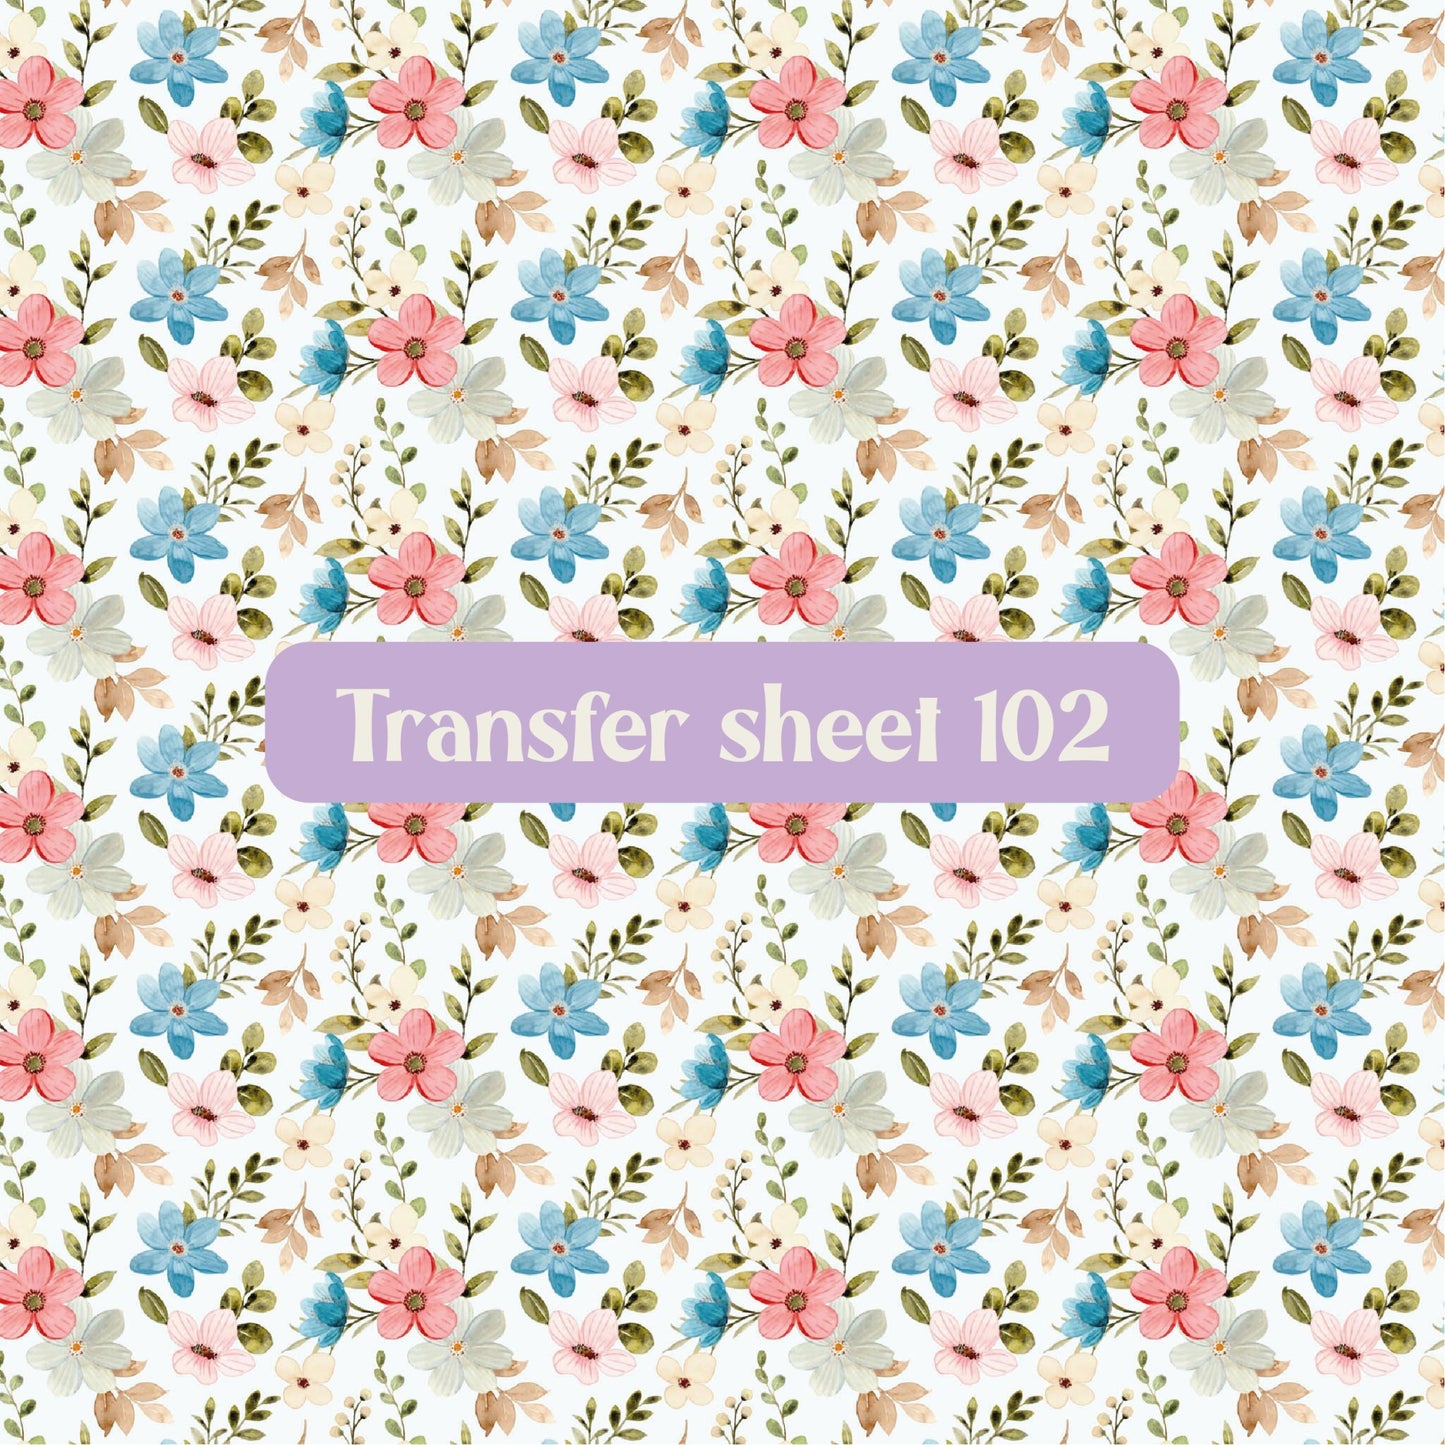 Transfer sheet 102 - Transfer paper - CLN Atelier